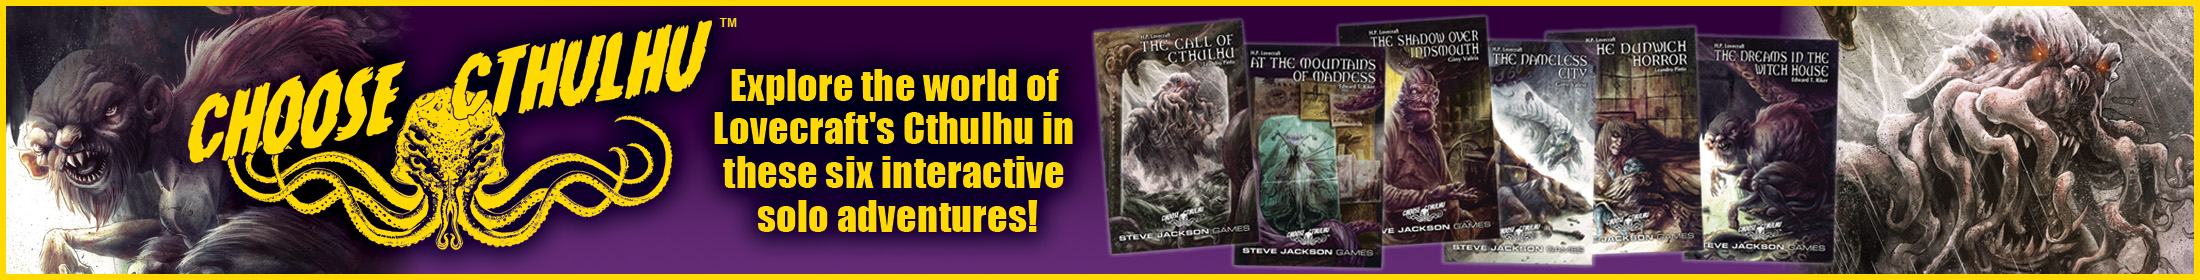 Choose Cthulhu Book 1: The Call of Cthulhu